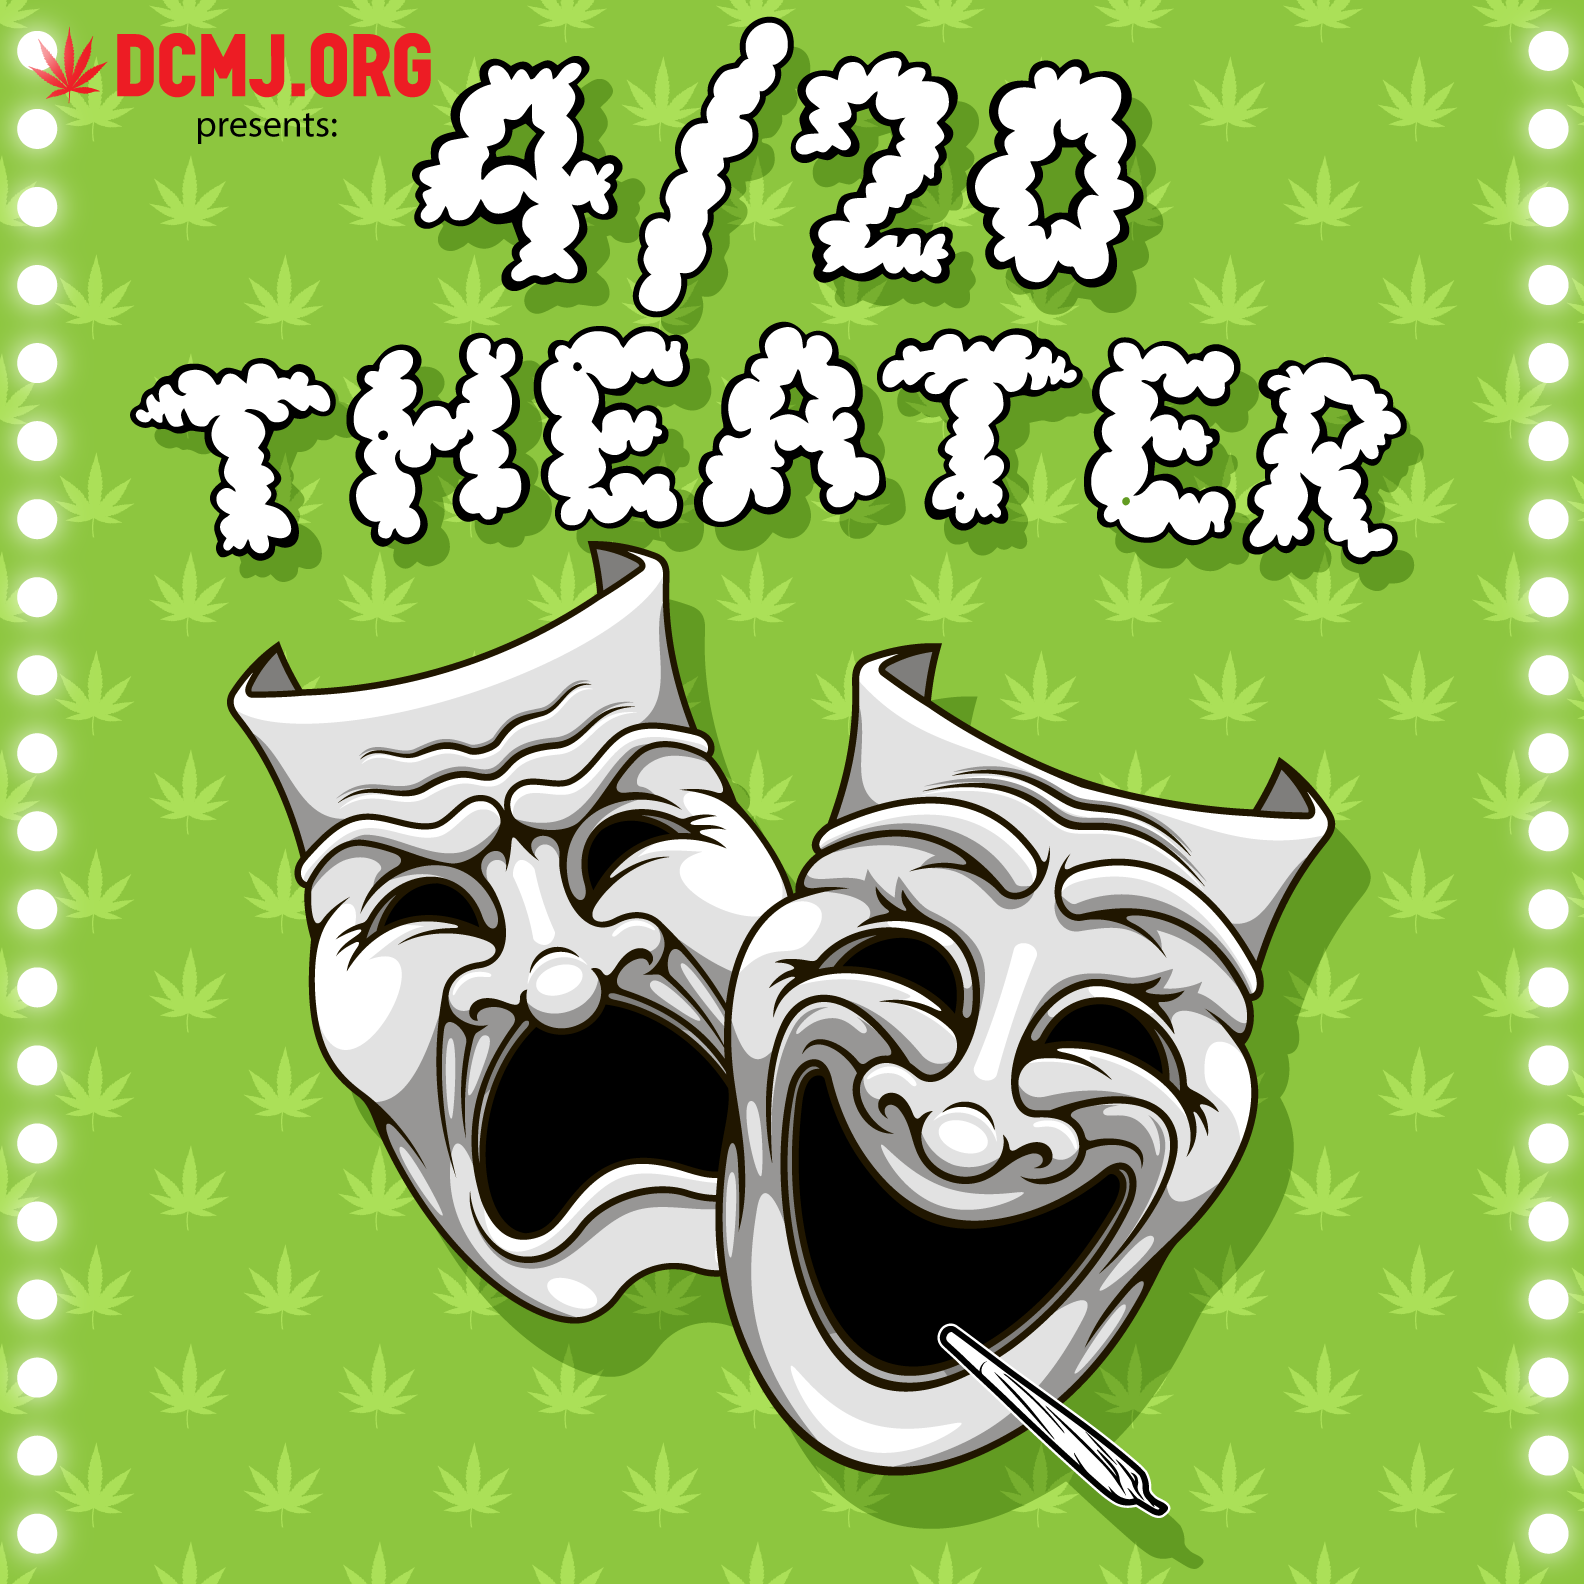 DCMJ Presents 4/20 Theater